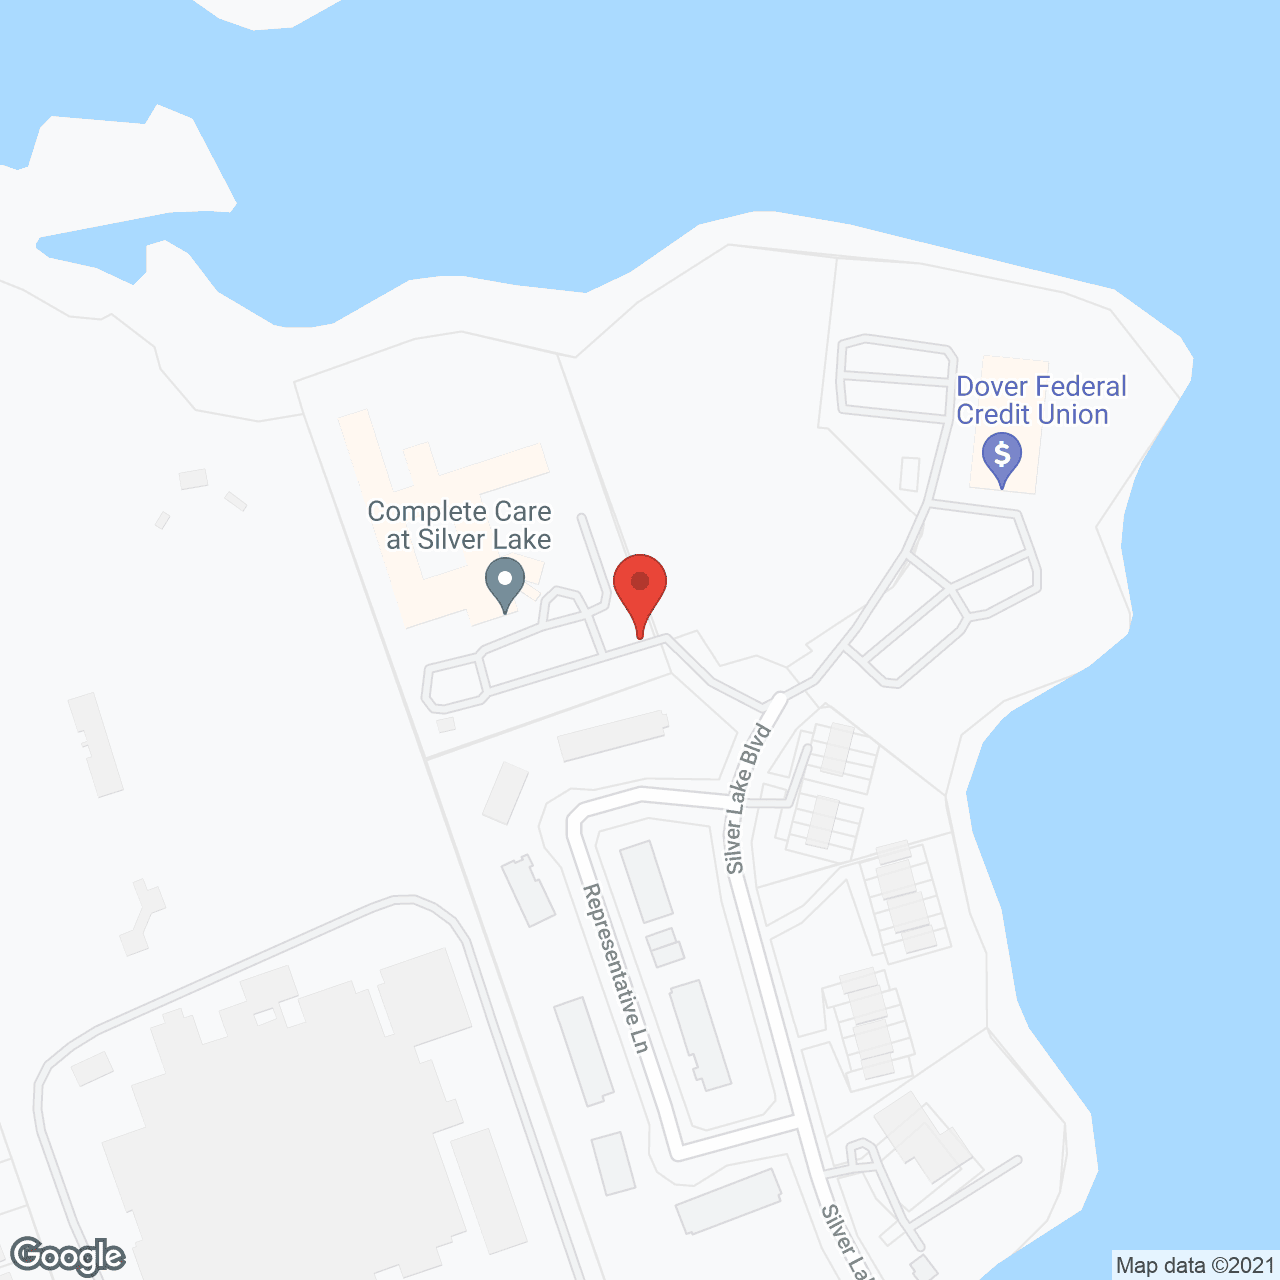 Silver Lake Center in google map